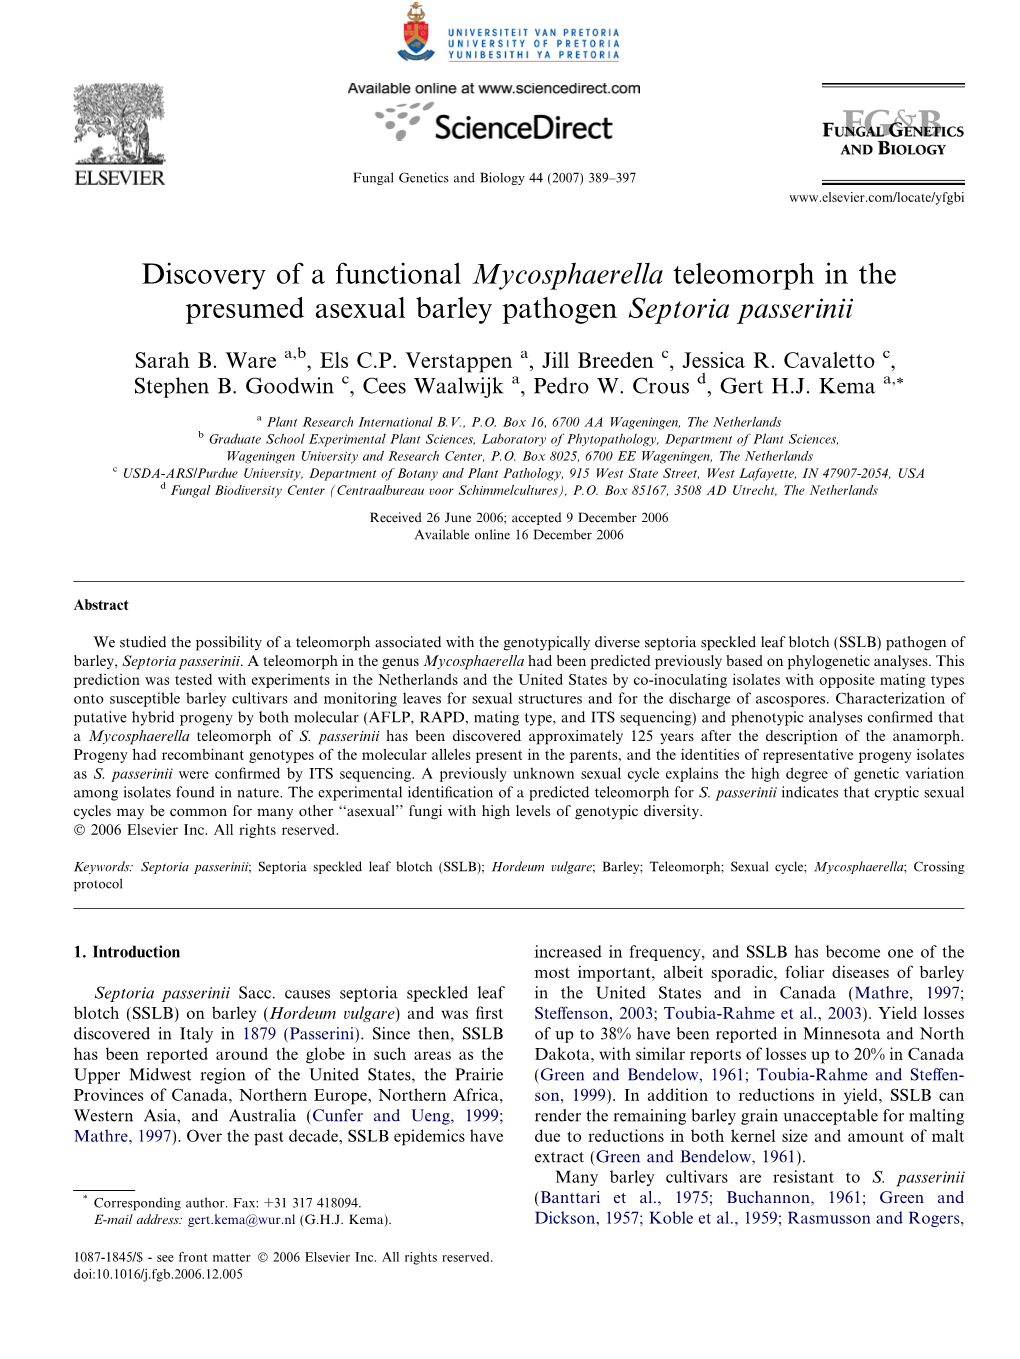 Discovery of a Functional Mycosphaerella Teleomorph in the Presumed Asexual Barley Pathogen Septoria Passerinii